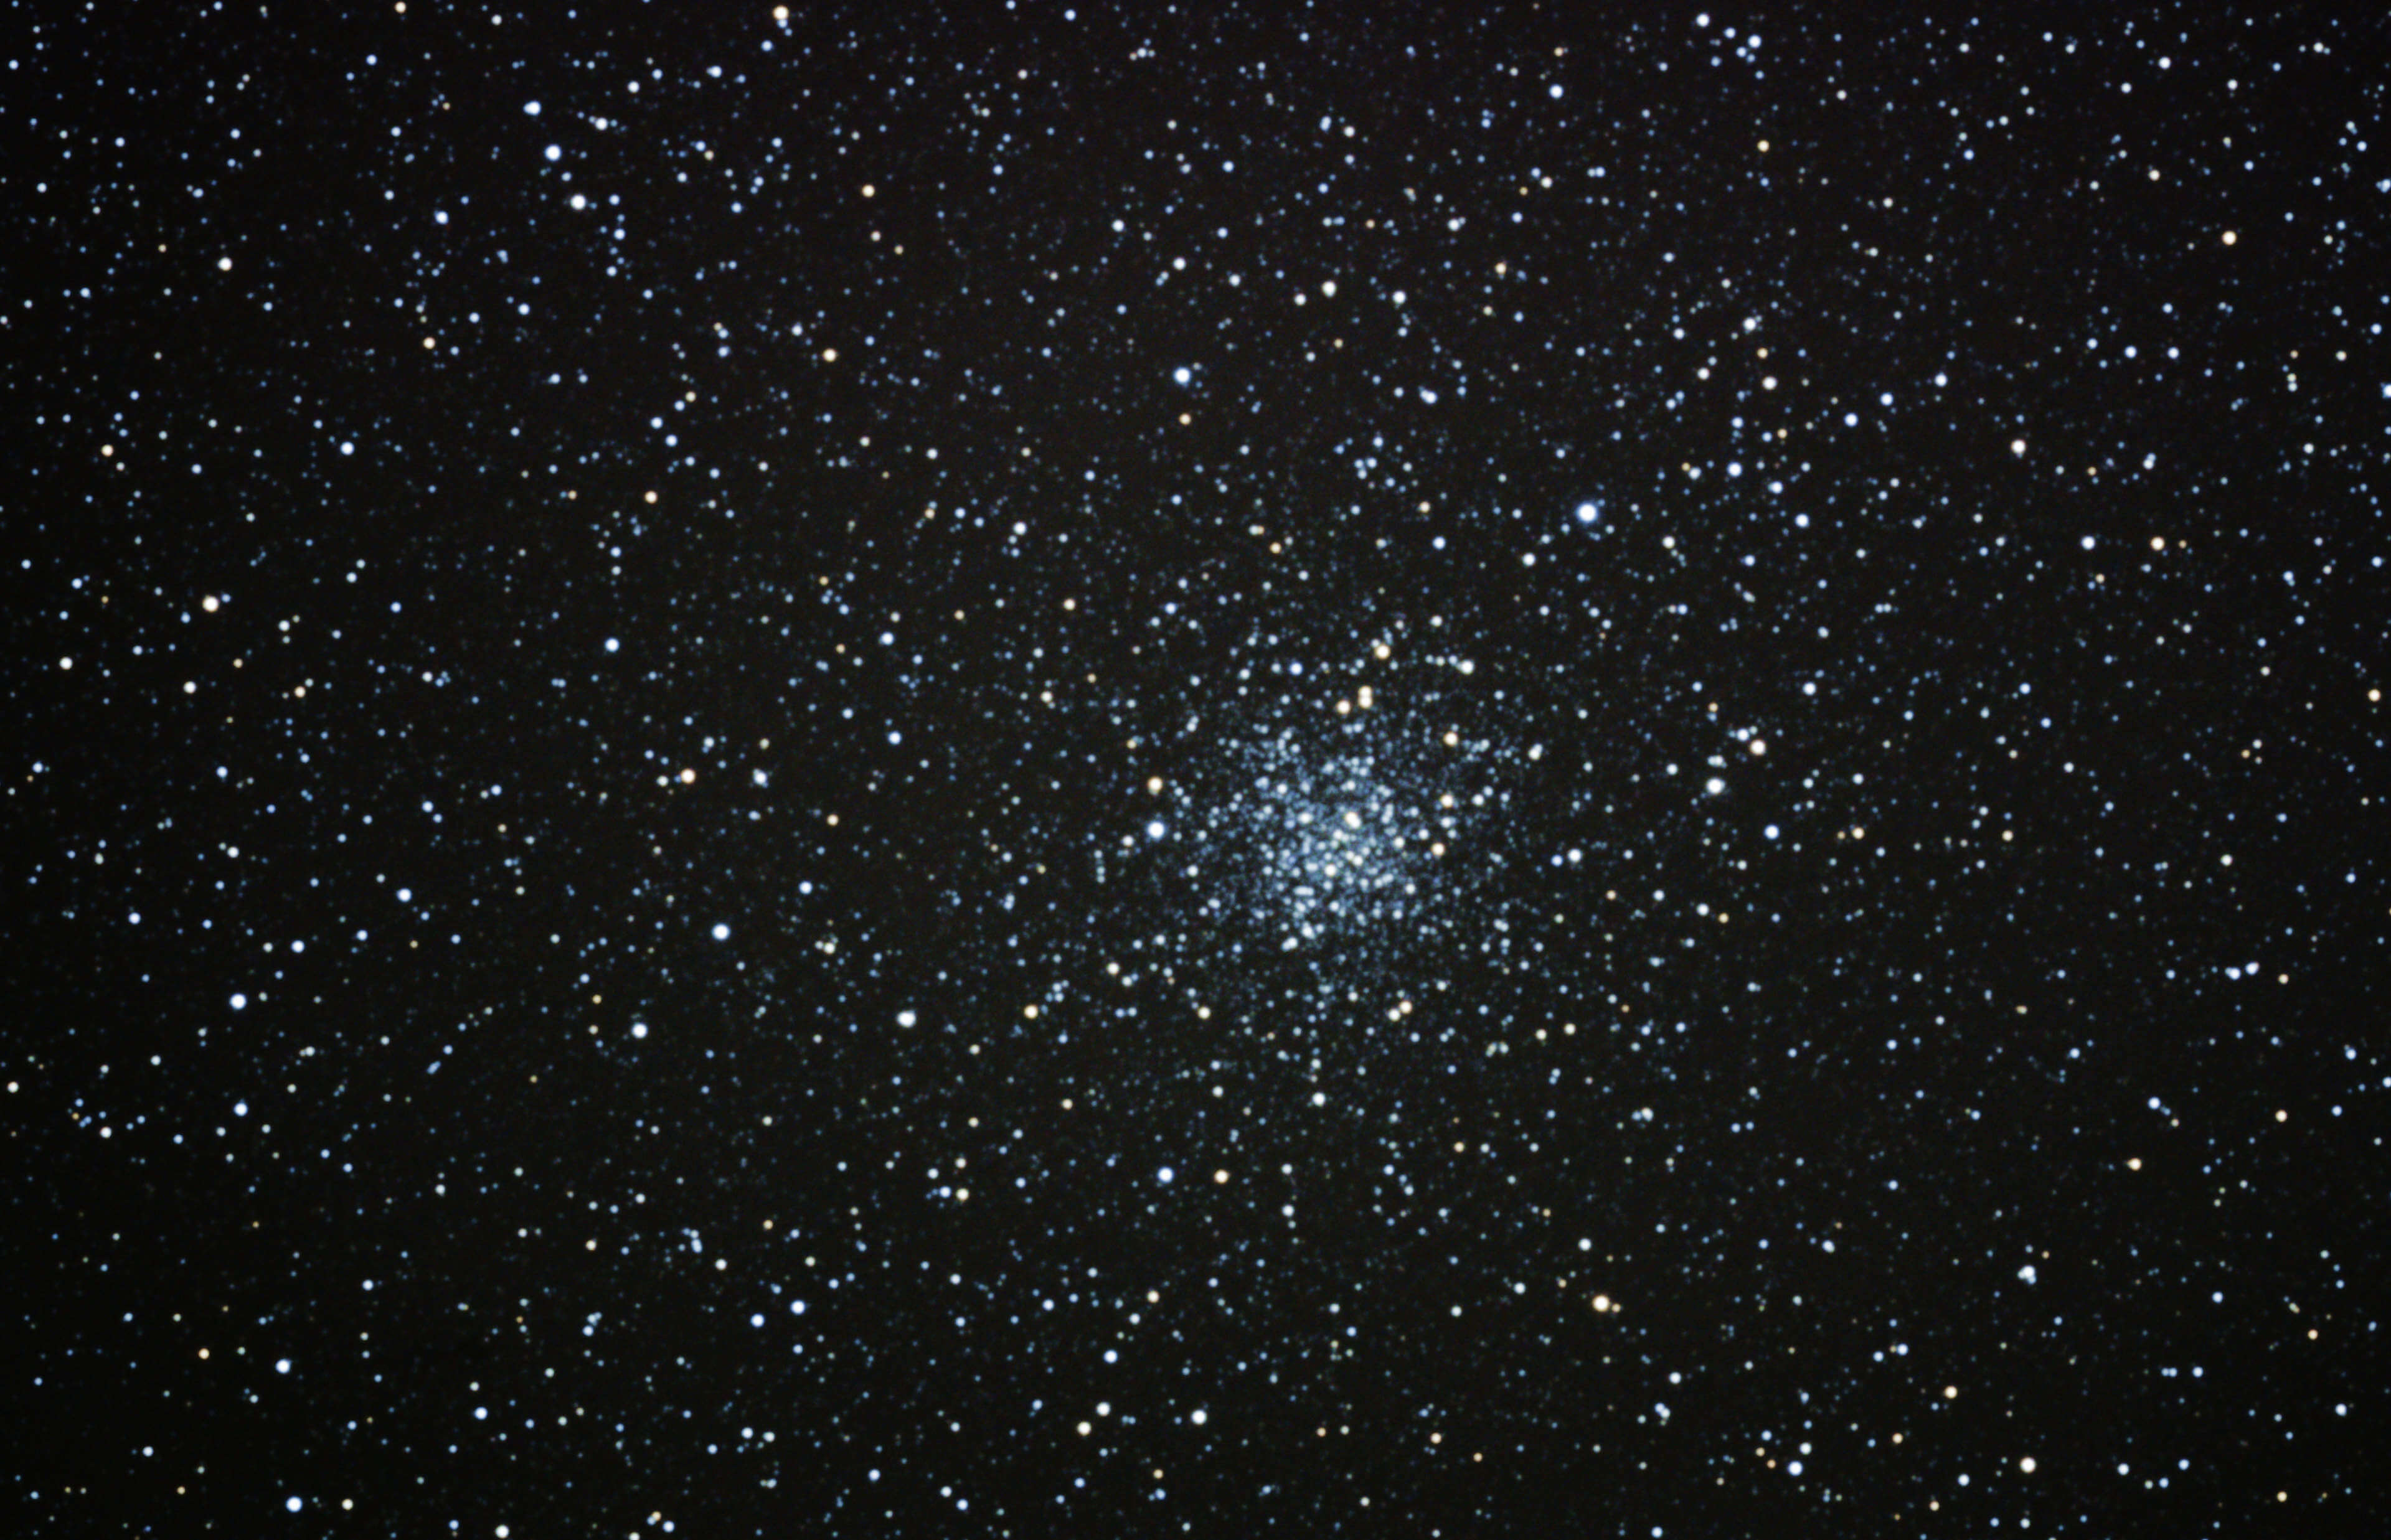 Loose globular star cluster M71